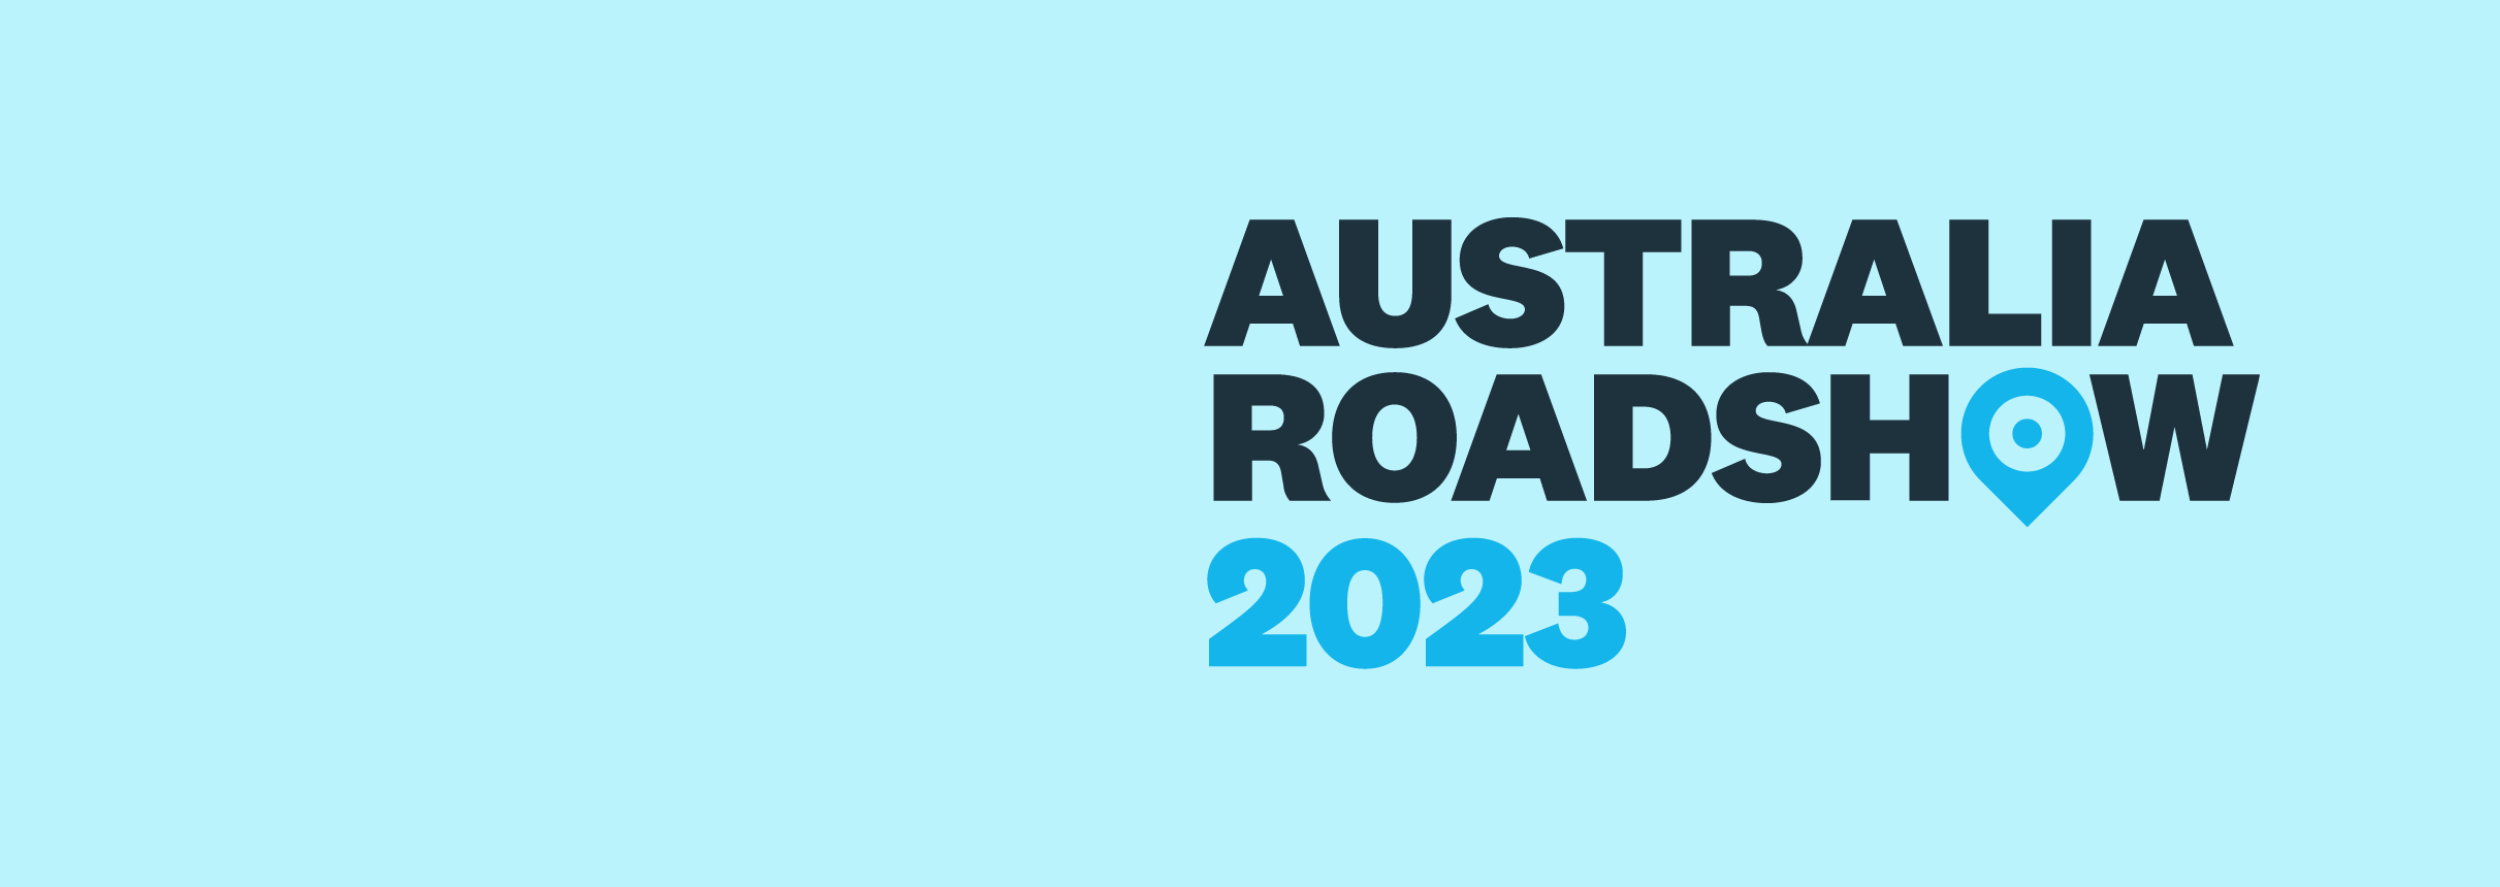 Xero Roadshow Australia 2023-page-header